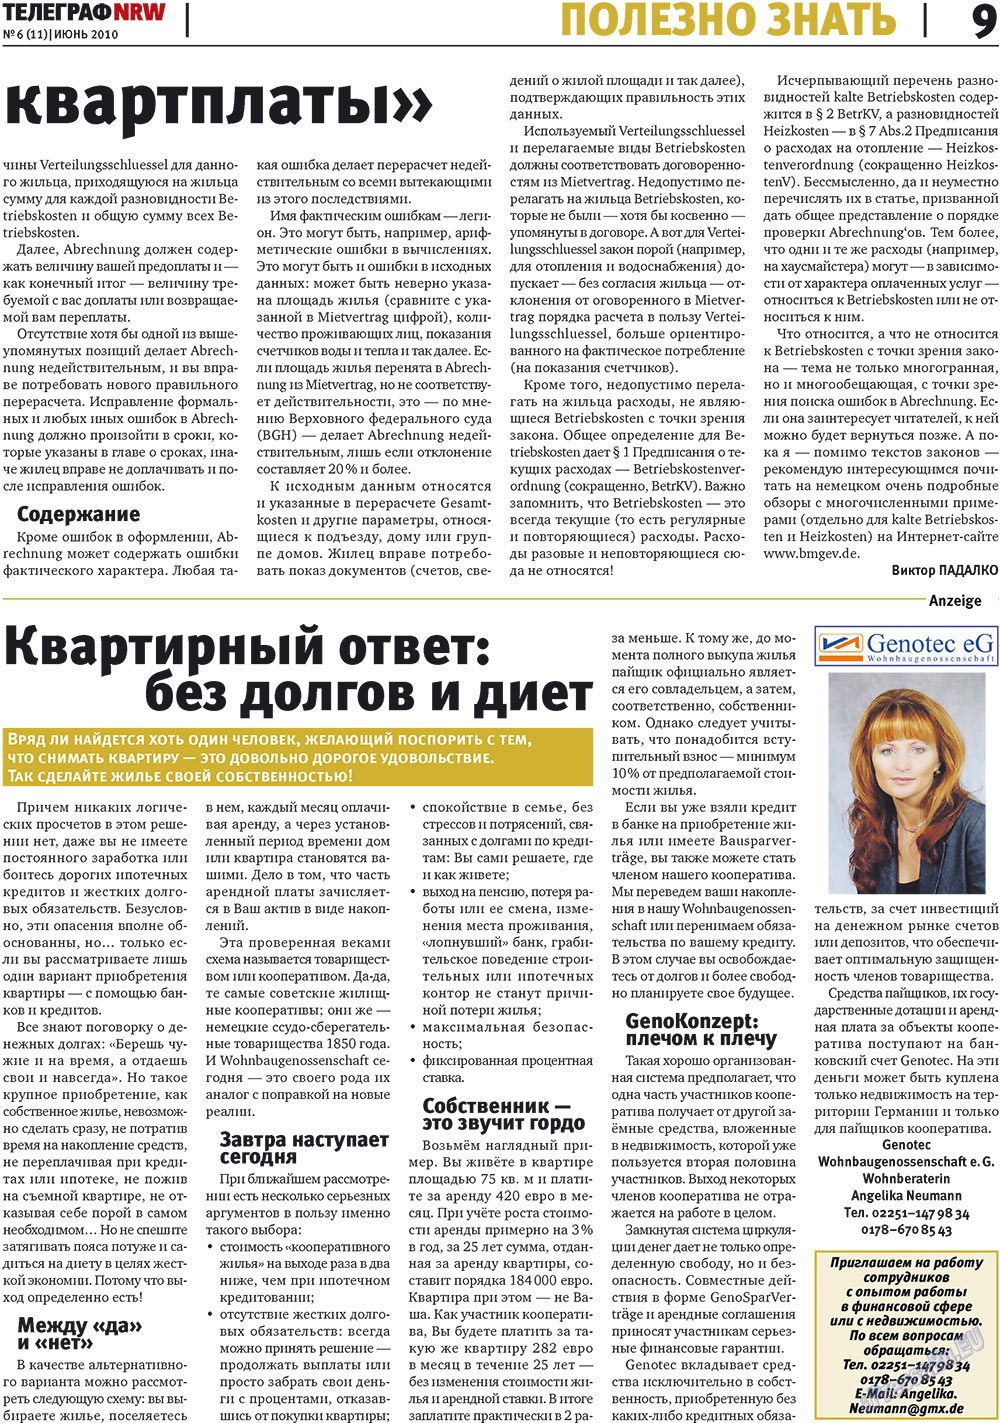 Телеграф NRW, газета. 2010 №6 стр.9